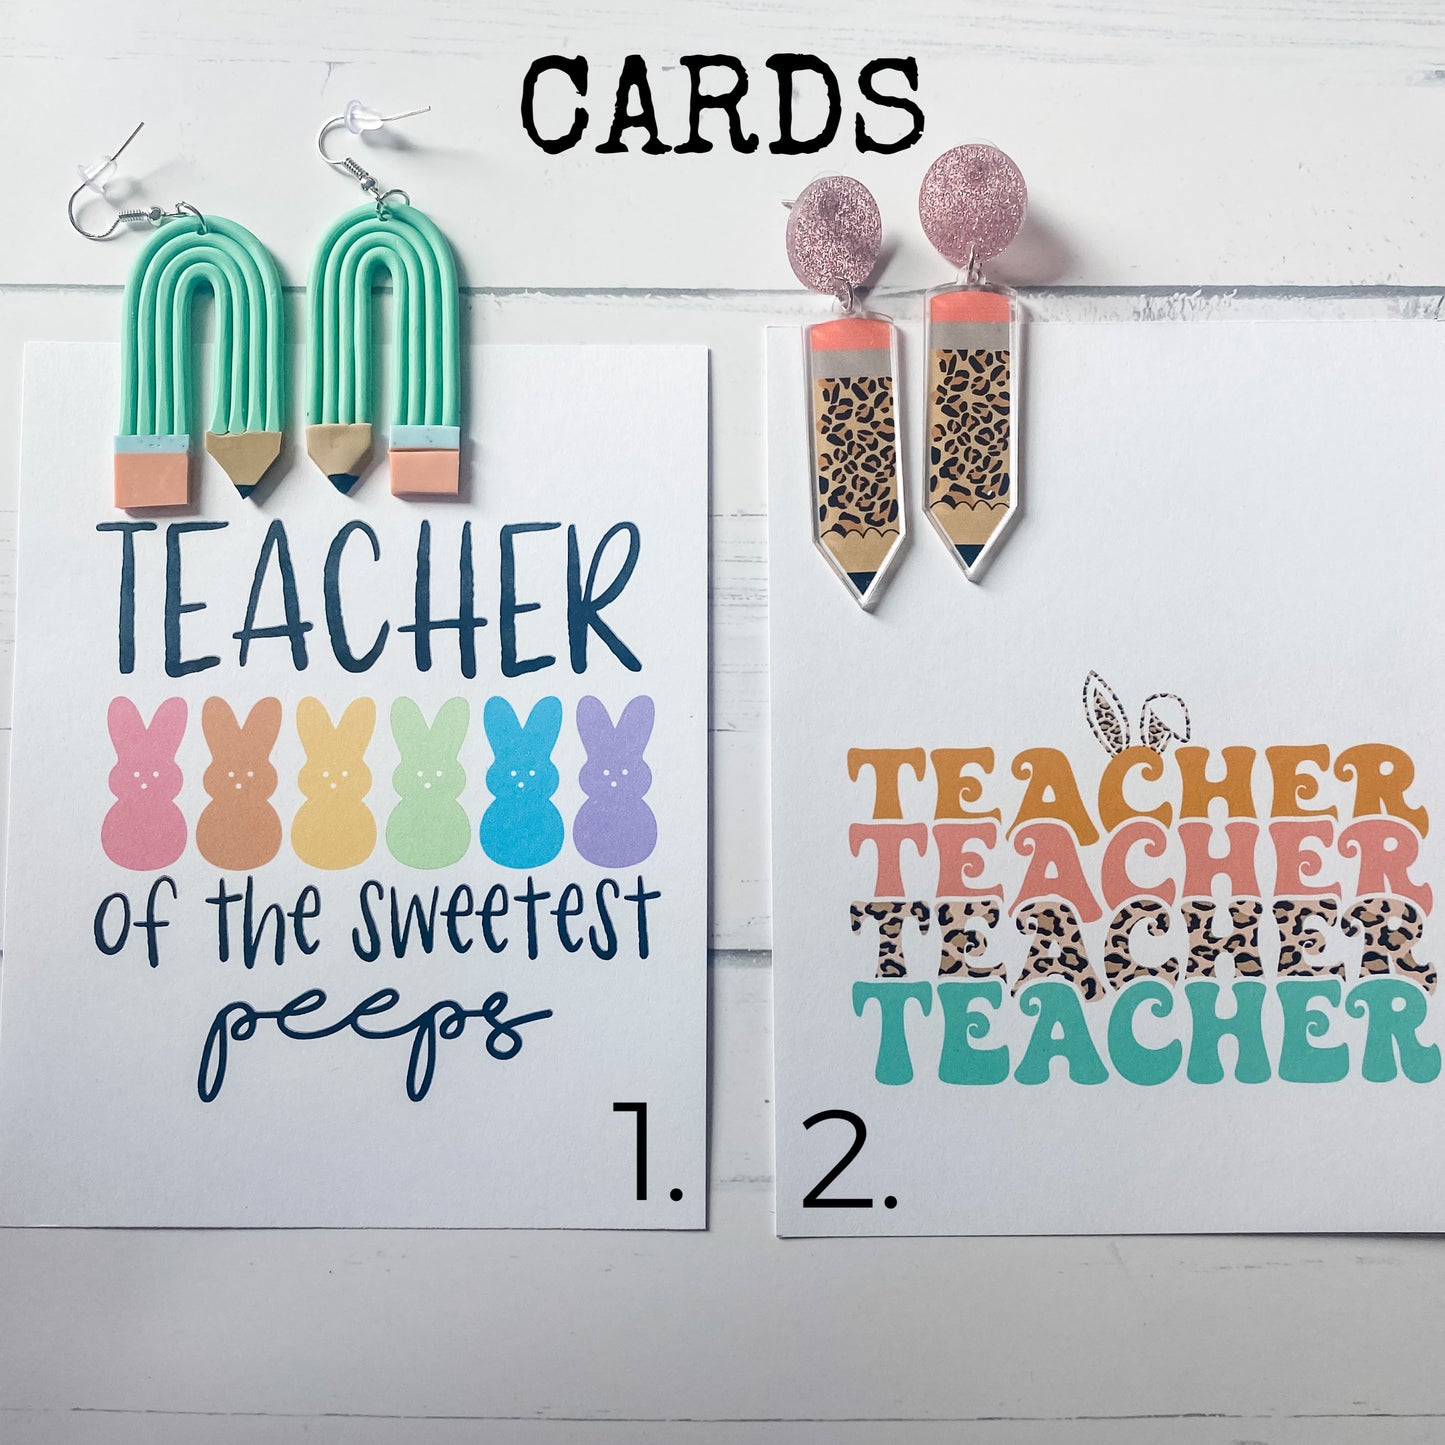 You're One Hoppy Teacher | Trendy Earrings and Card Set